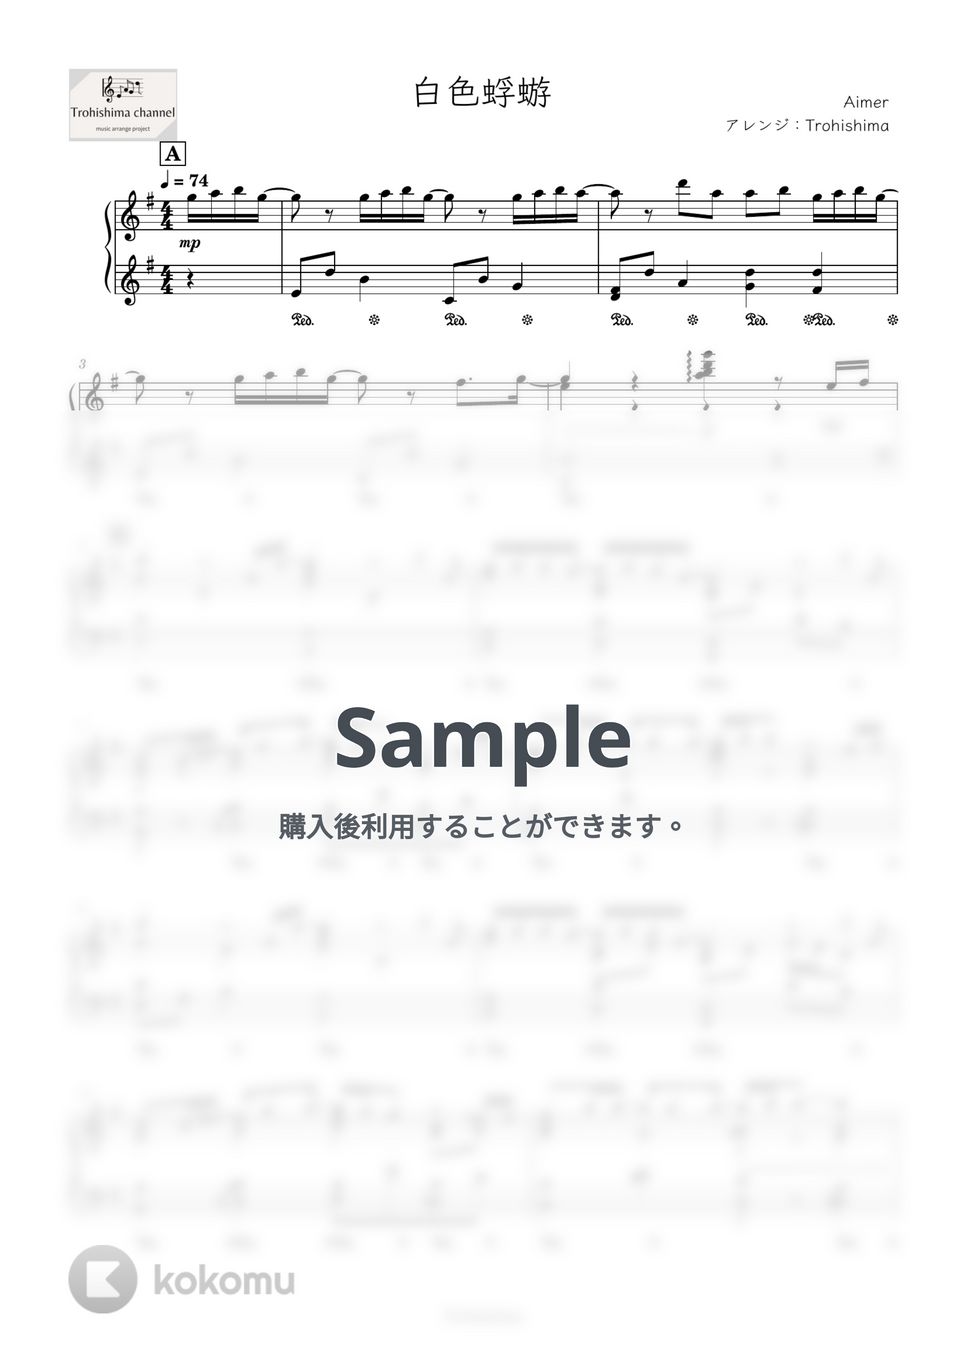 Aimer - 白色蜉蝣 (ドラマ『大奥Season2』主題歌) by Trohishima